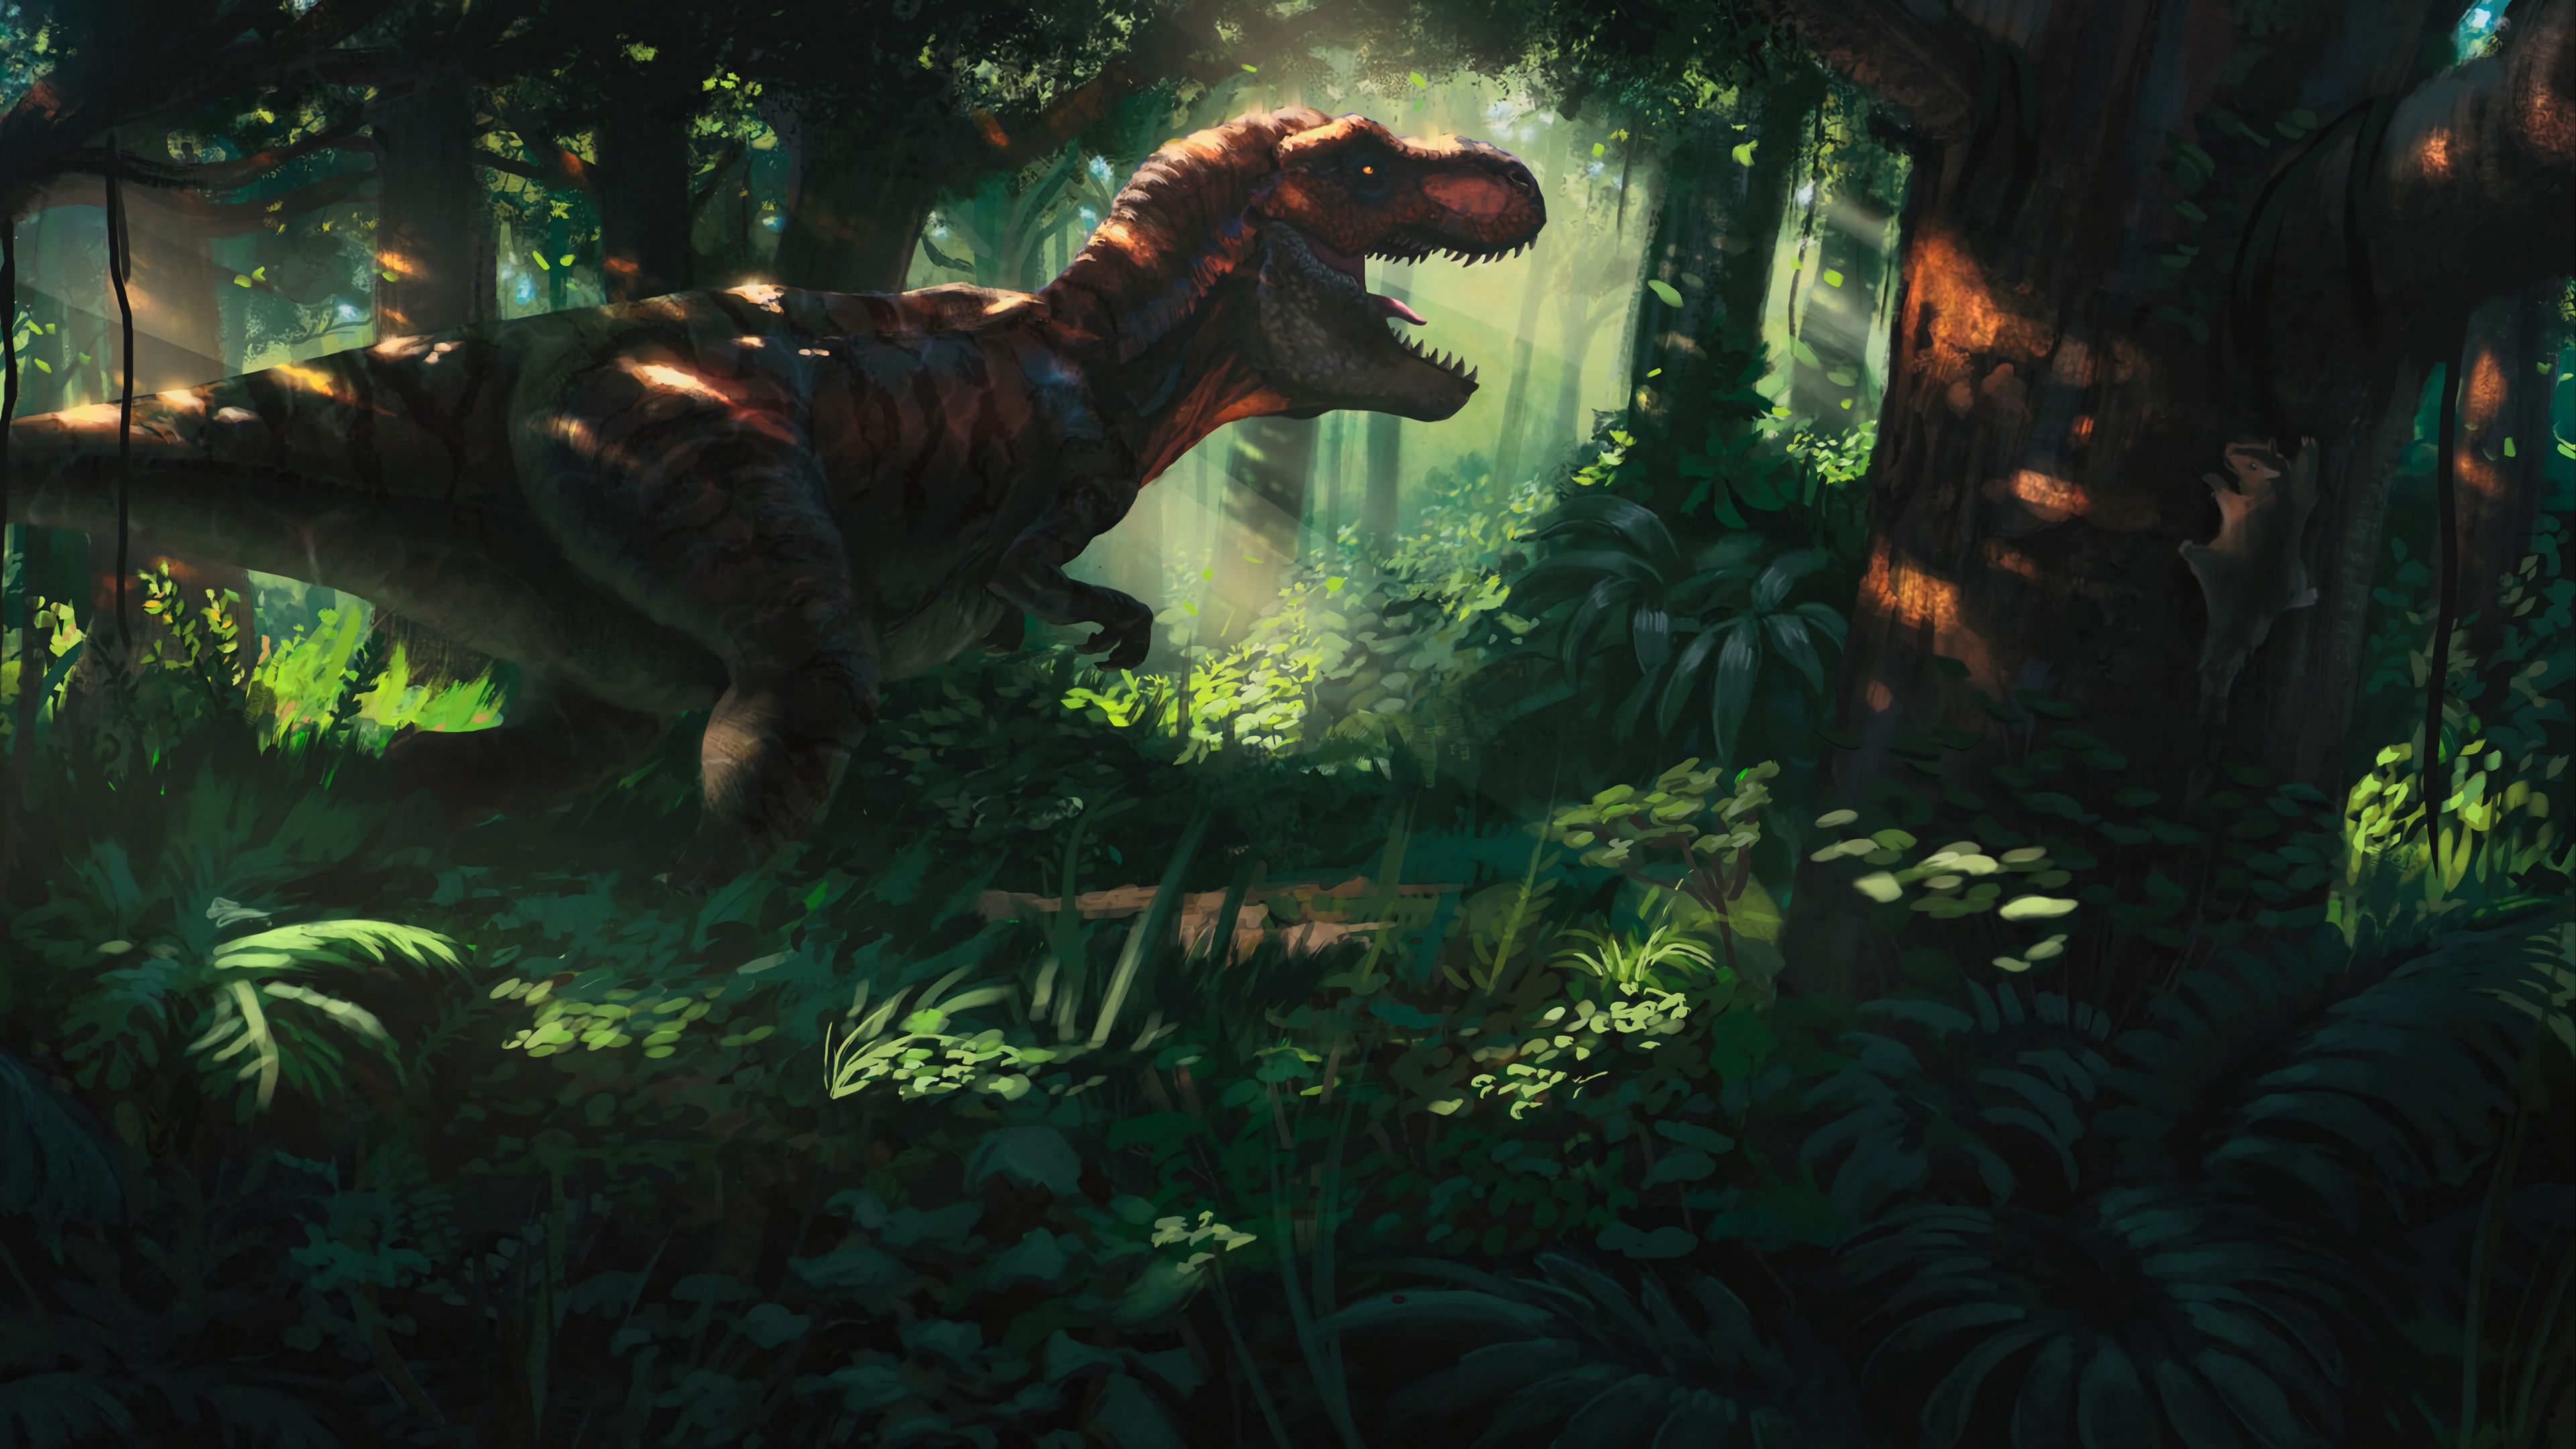 Download wallpaper 3840x2160 tyrannosaurus dinosaur jungle